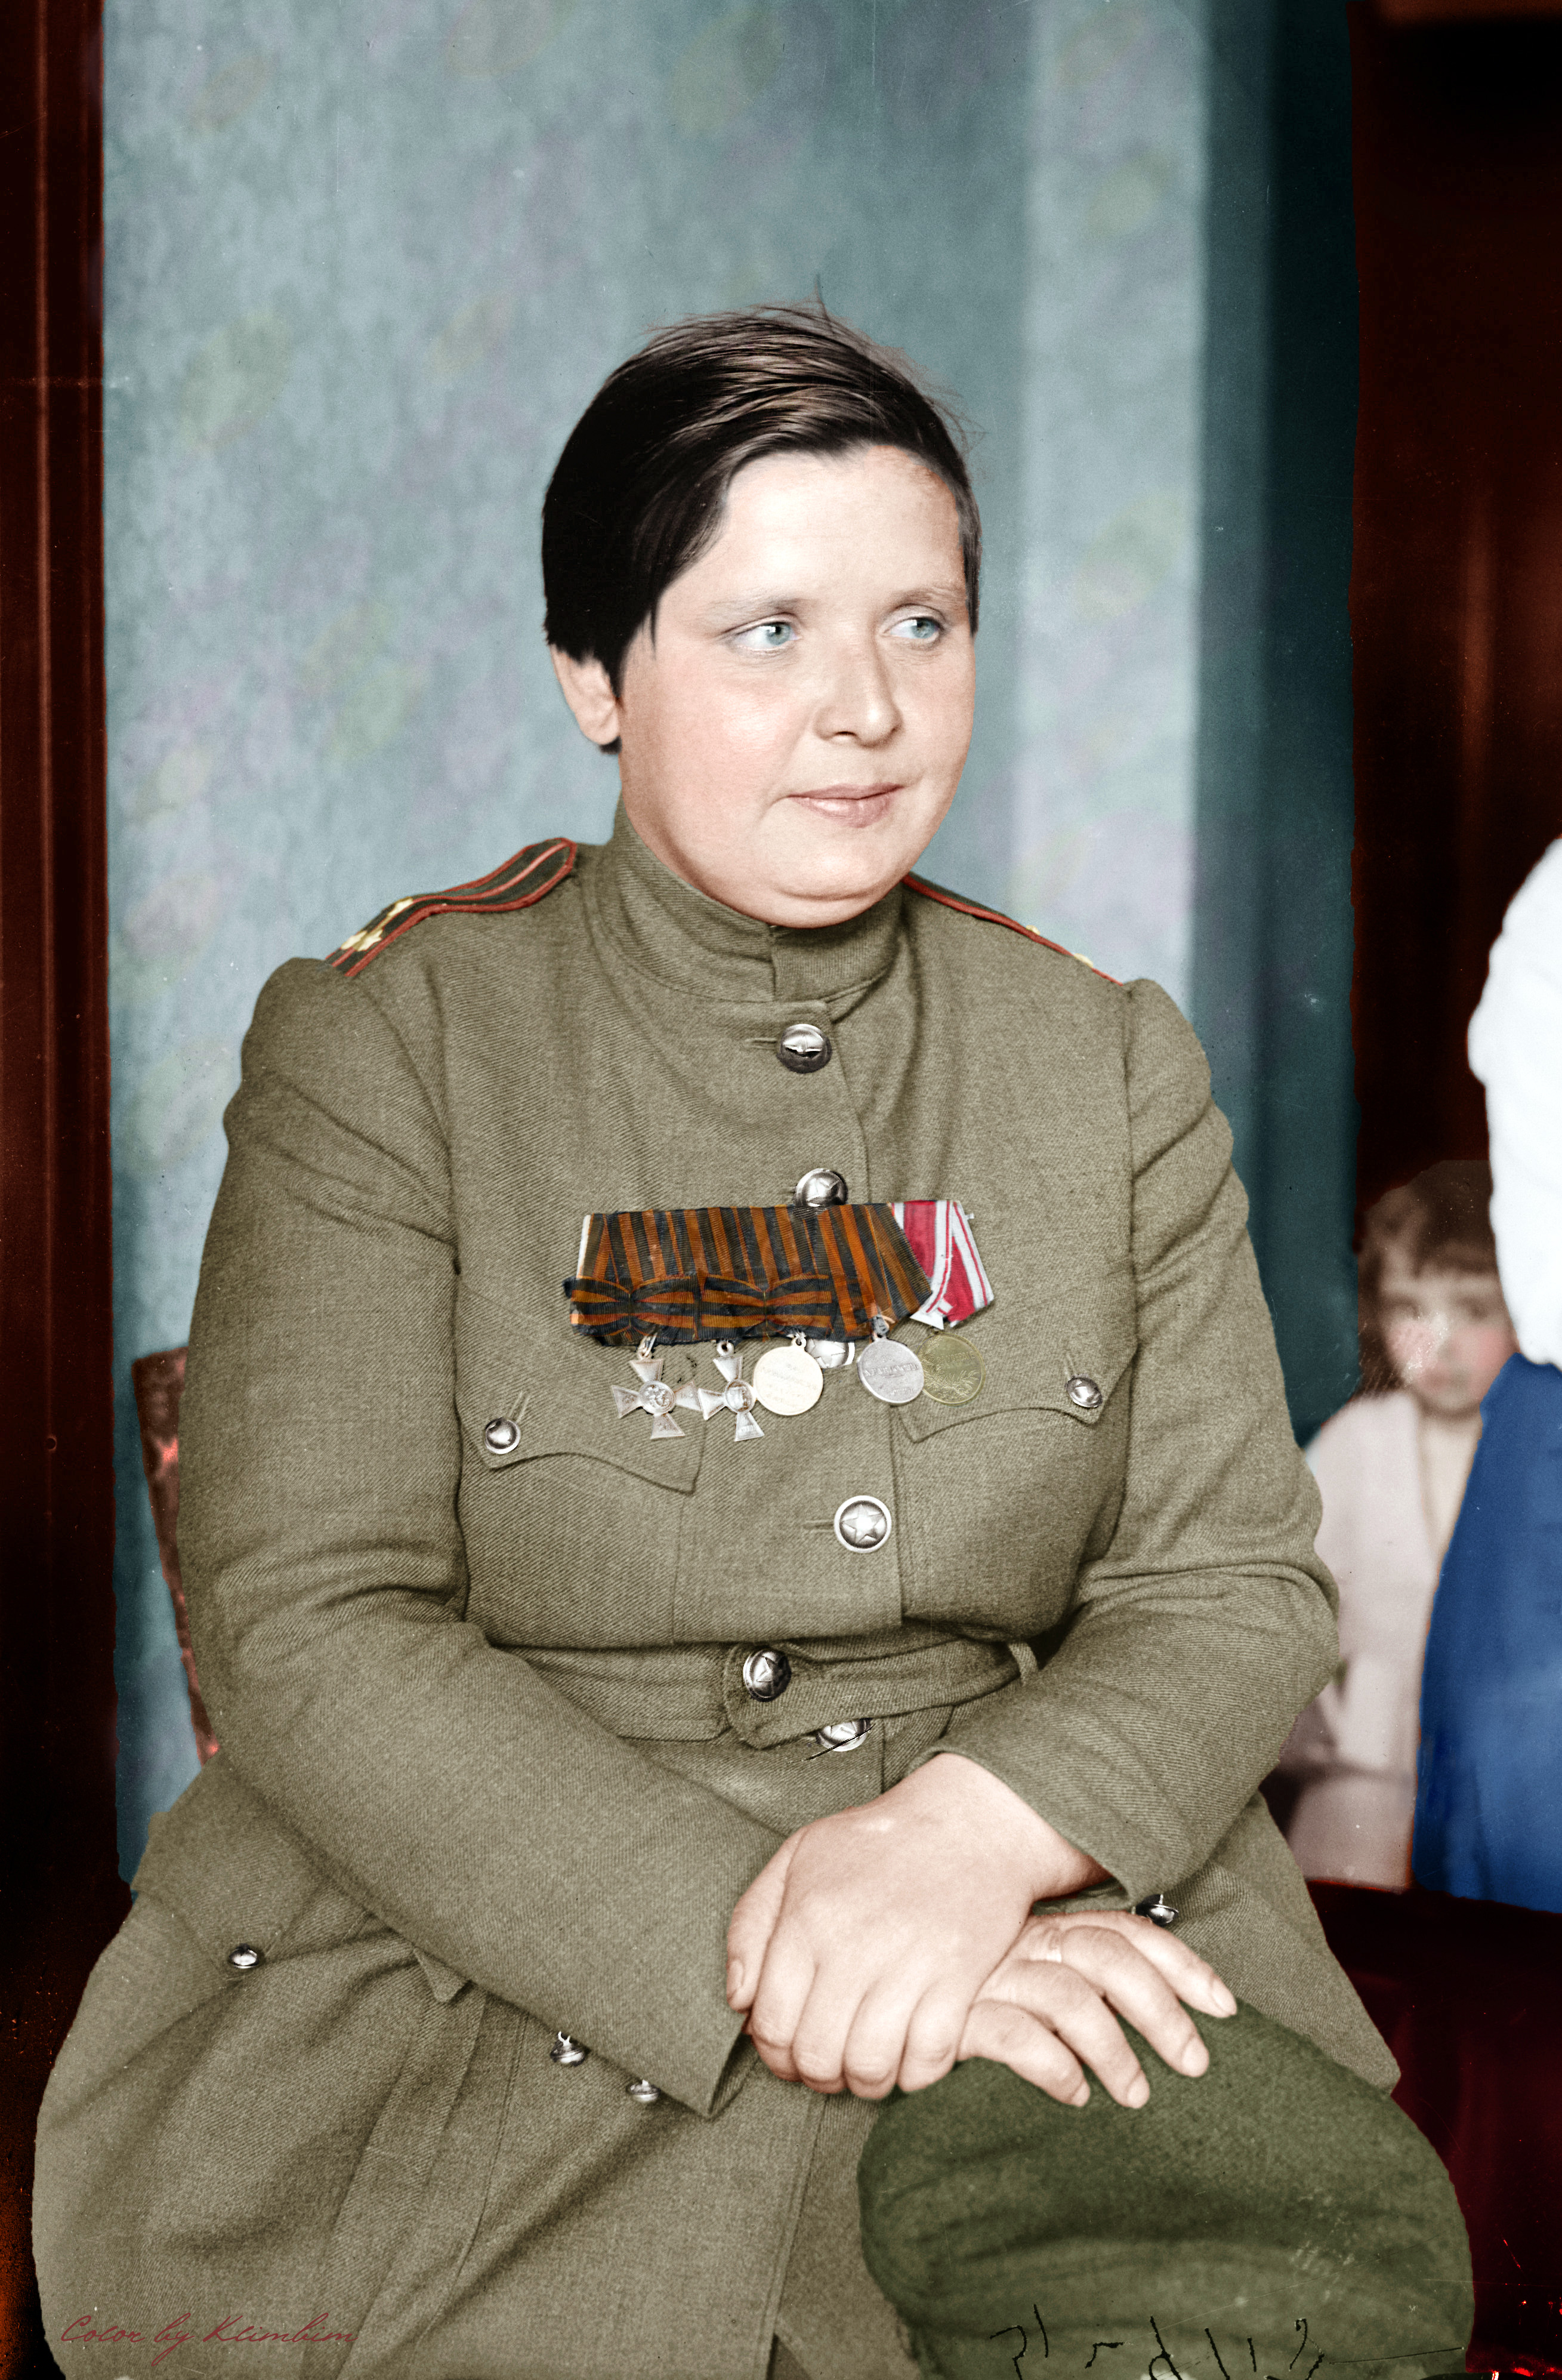 http://cont.ws/uploads/pic/2016/3/maria-bochkareva-russia-woman-world-war-1-ww1-the-great-war-tsar-nicholas.jpg